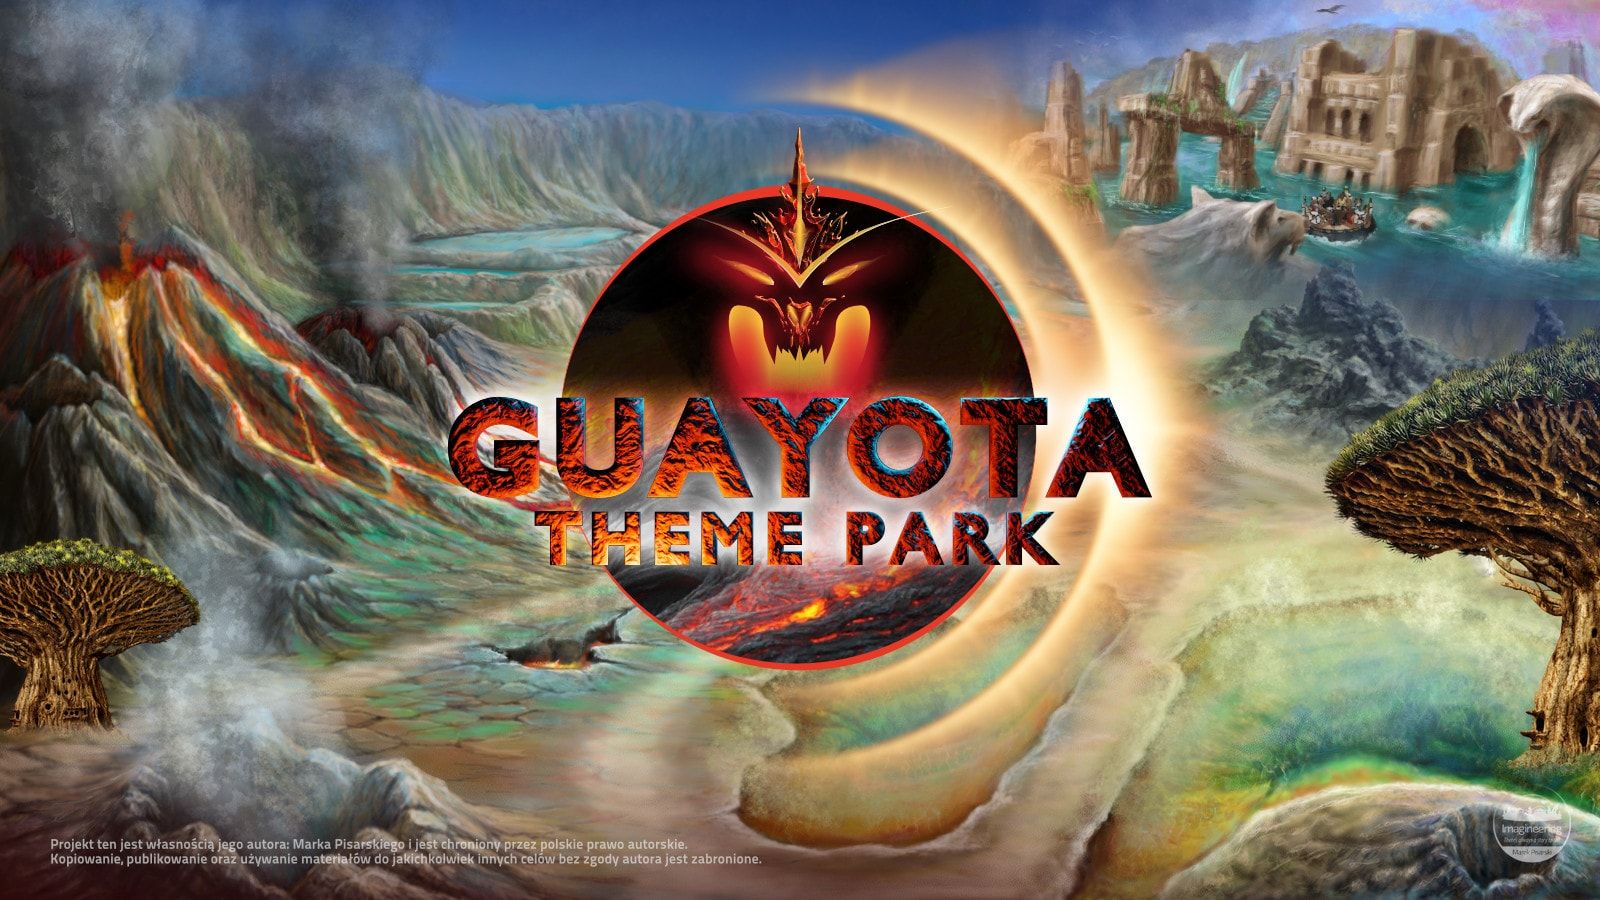 Guayota Theme Park